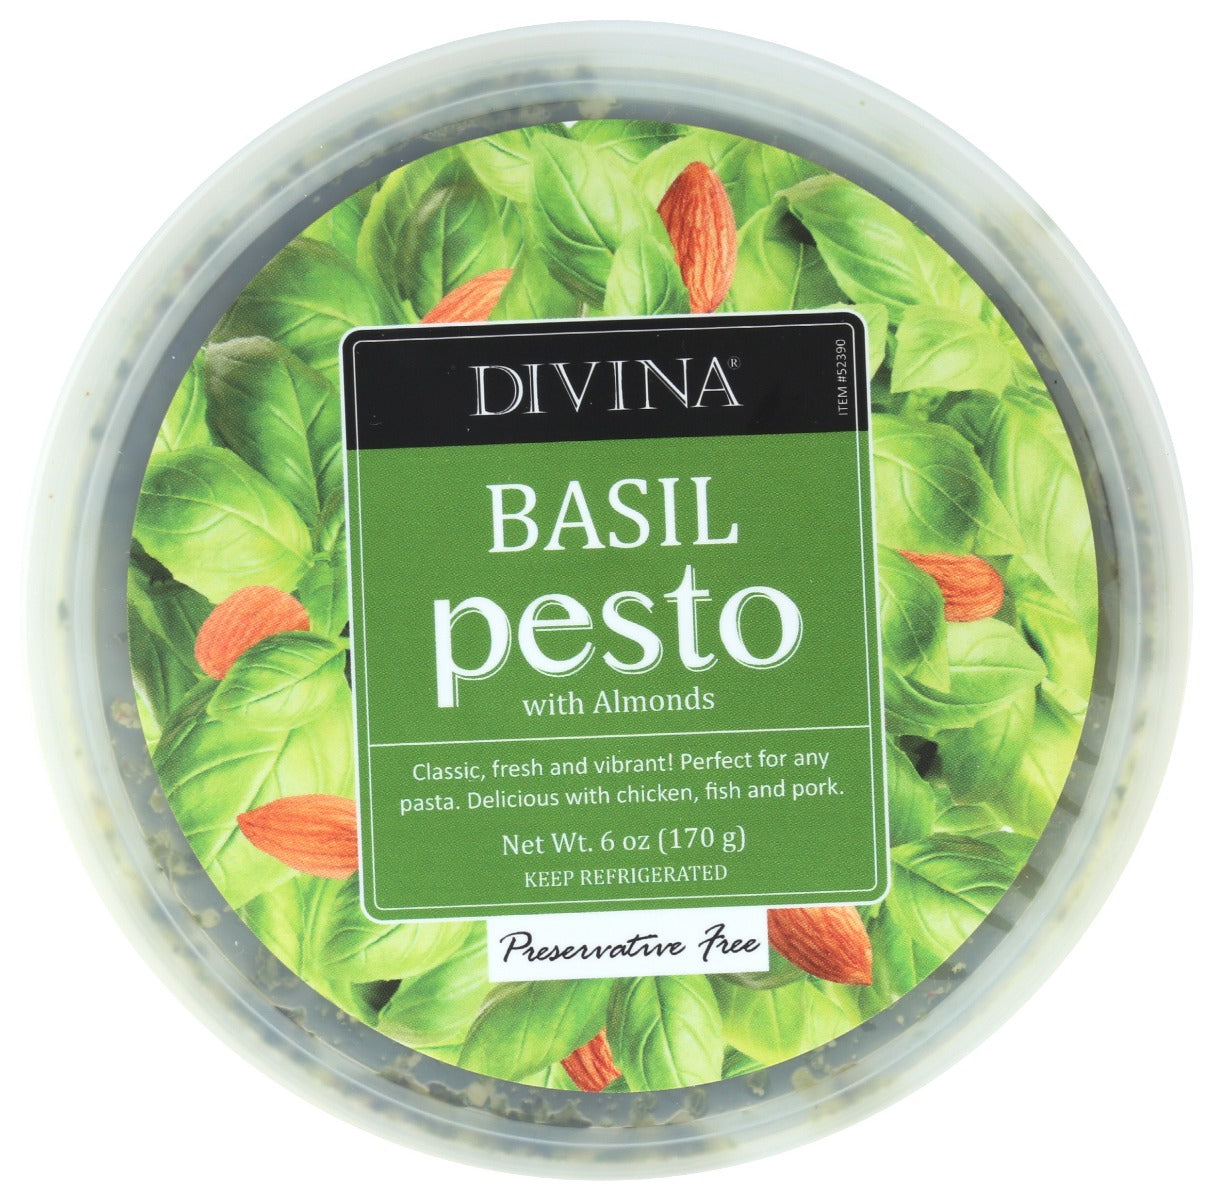 DIVINA: Basil Pesto with Almonds, 6 oz - Vending Business Solutions